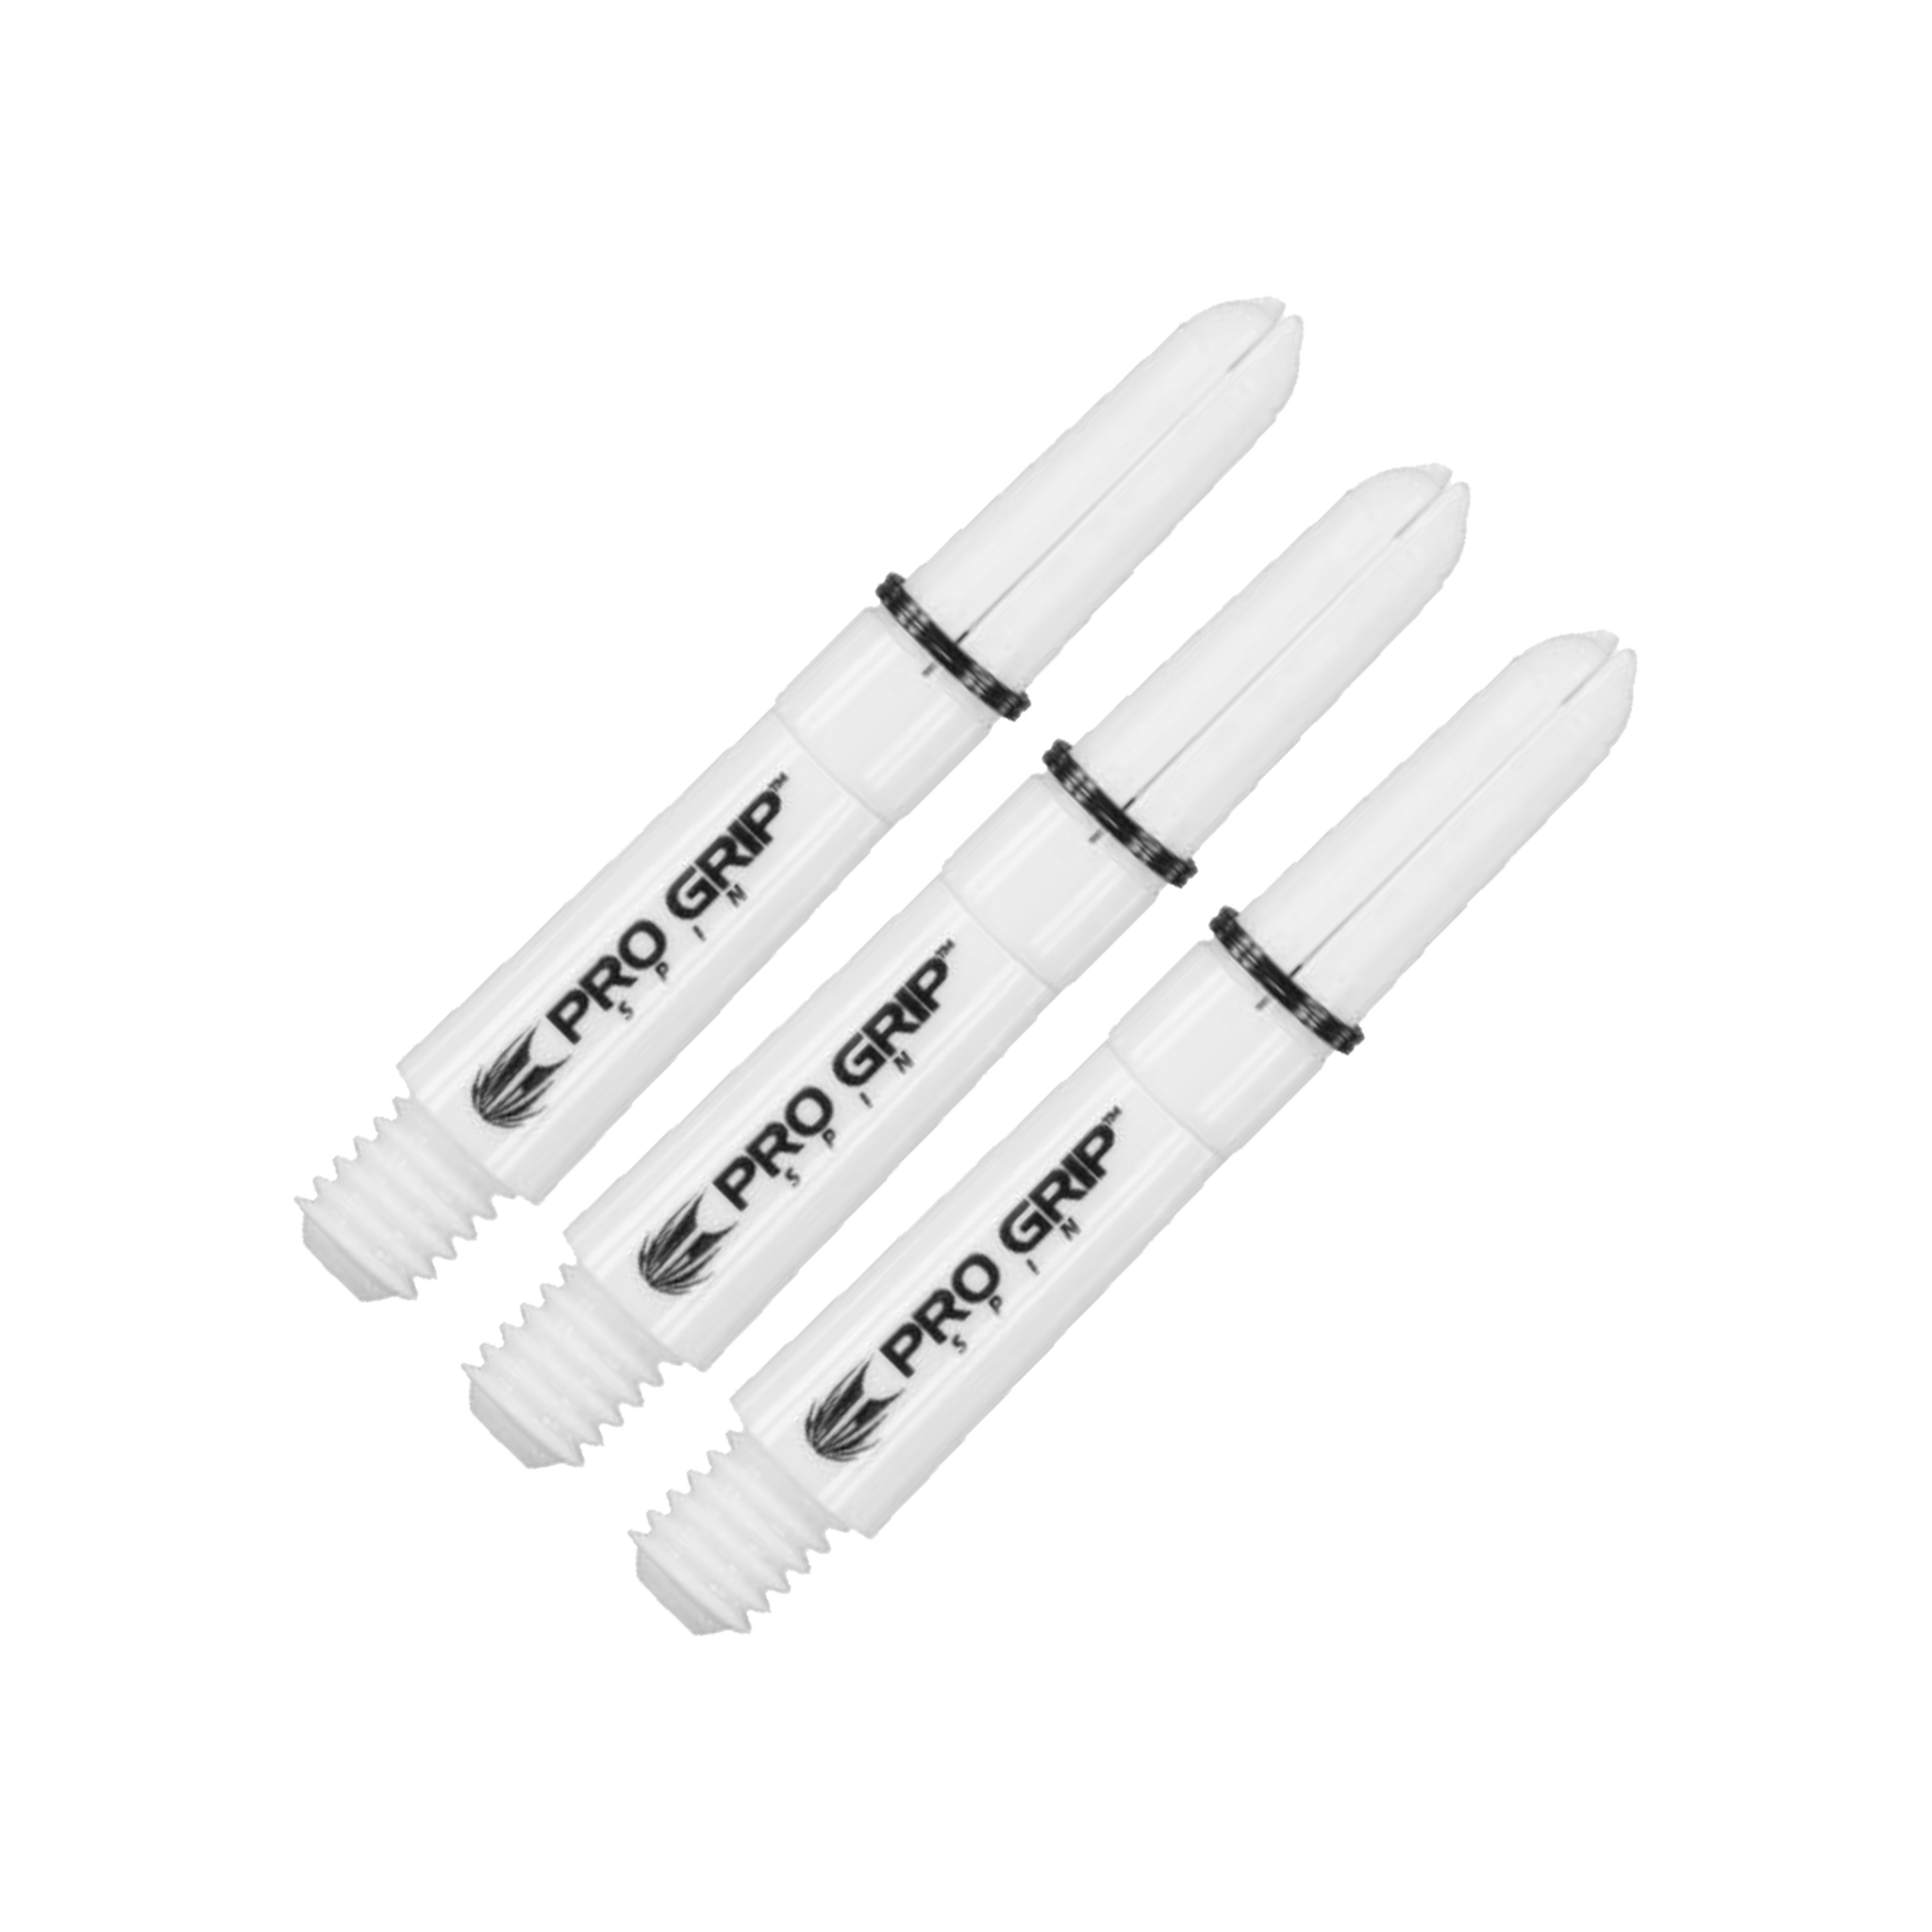 Target Pro Grip Spin Short (34mm) Nylon Dart Shafts White Shafts